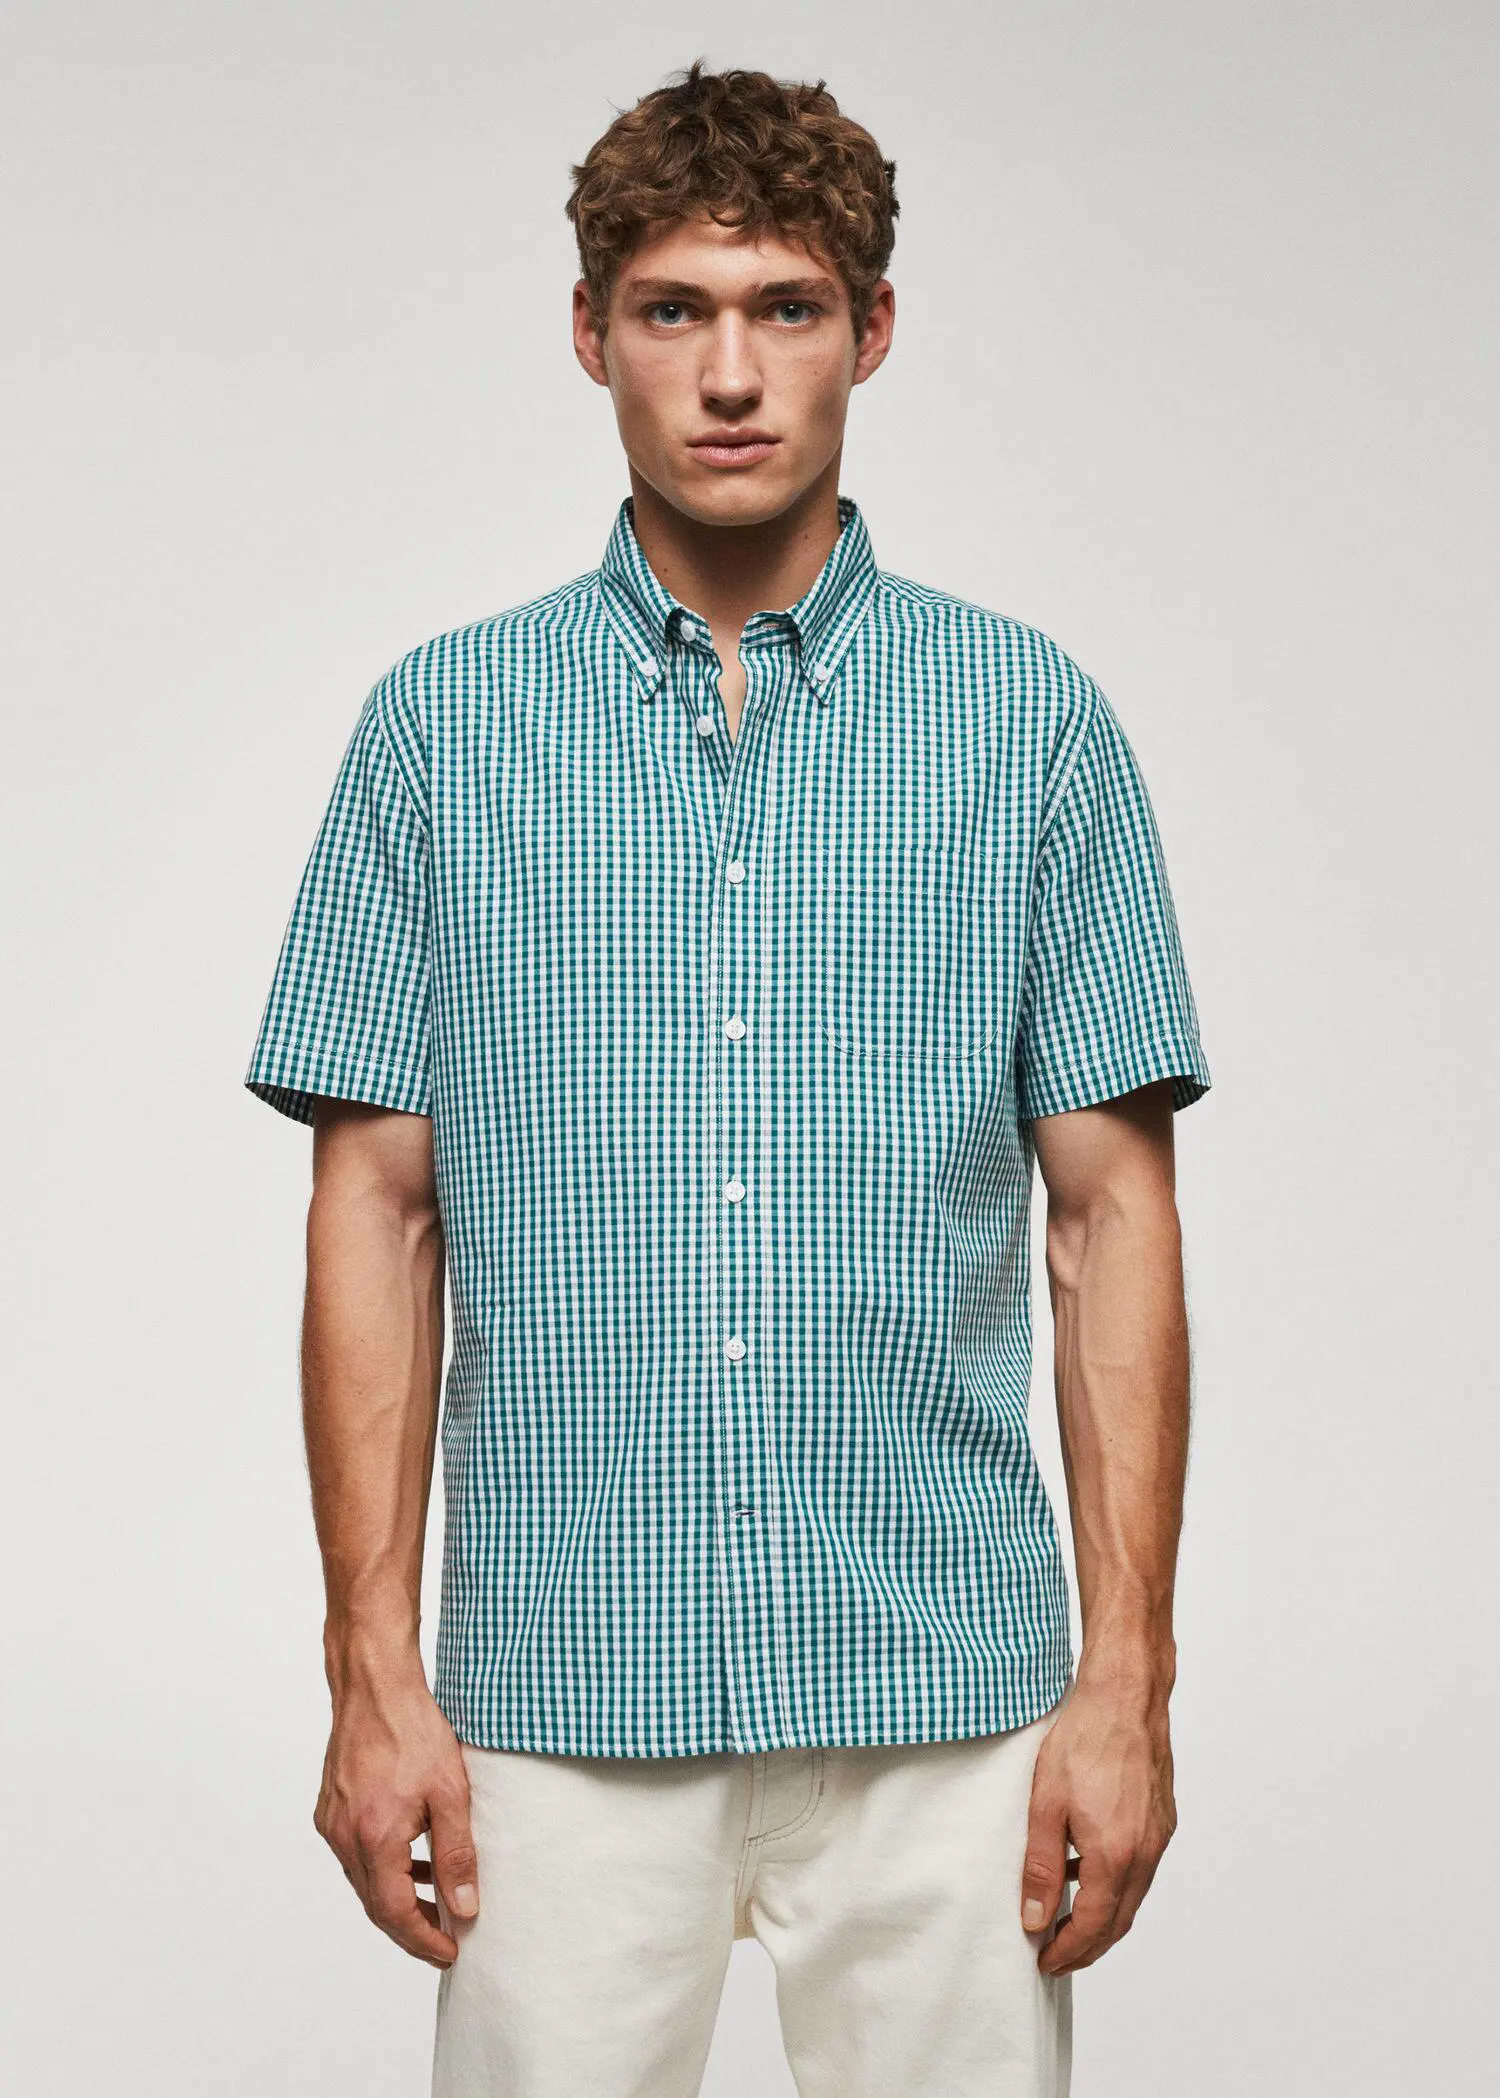 Mango 100% cotton short-sleeved printed shirt. 2